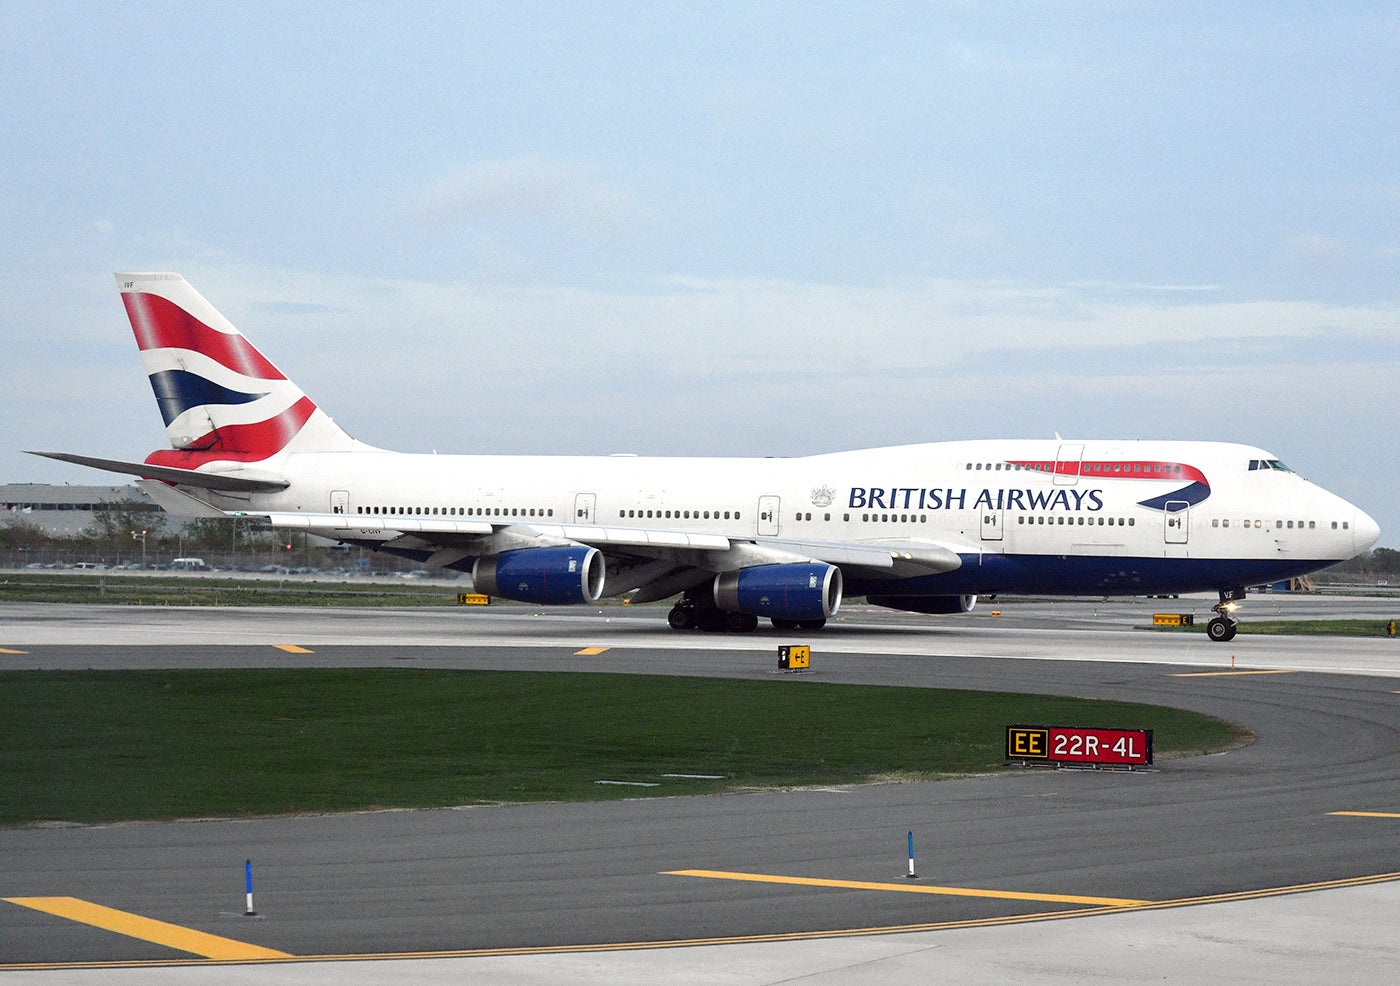 British Airways 747-400 at JFK